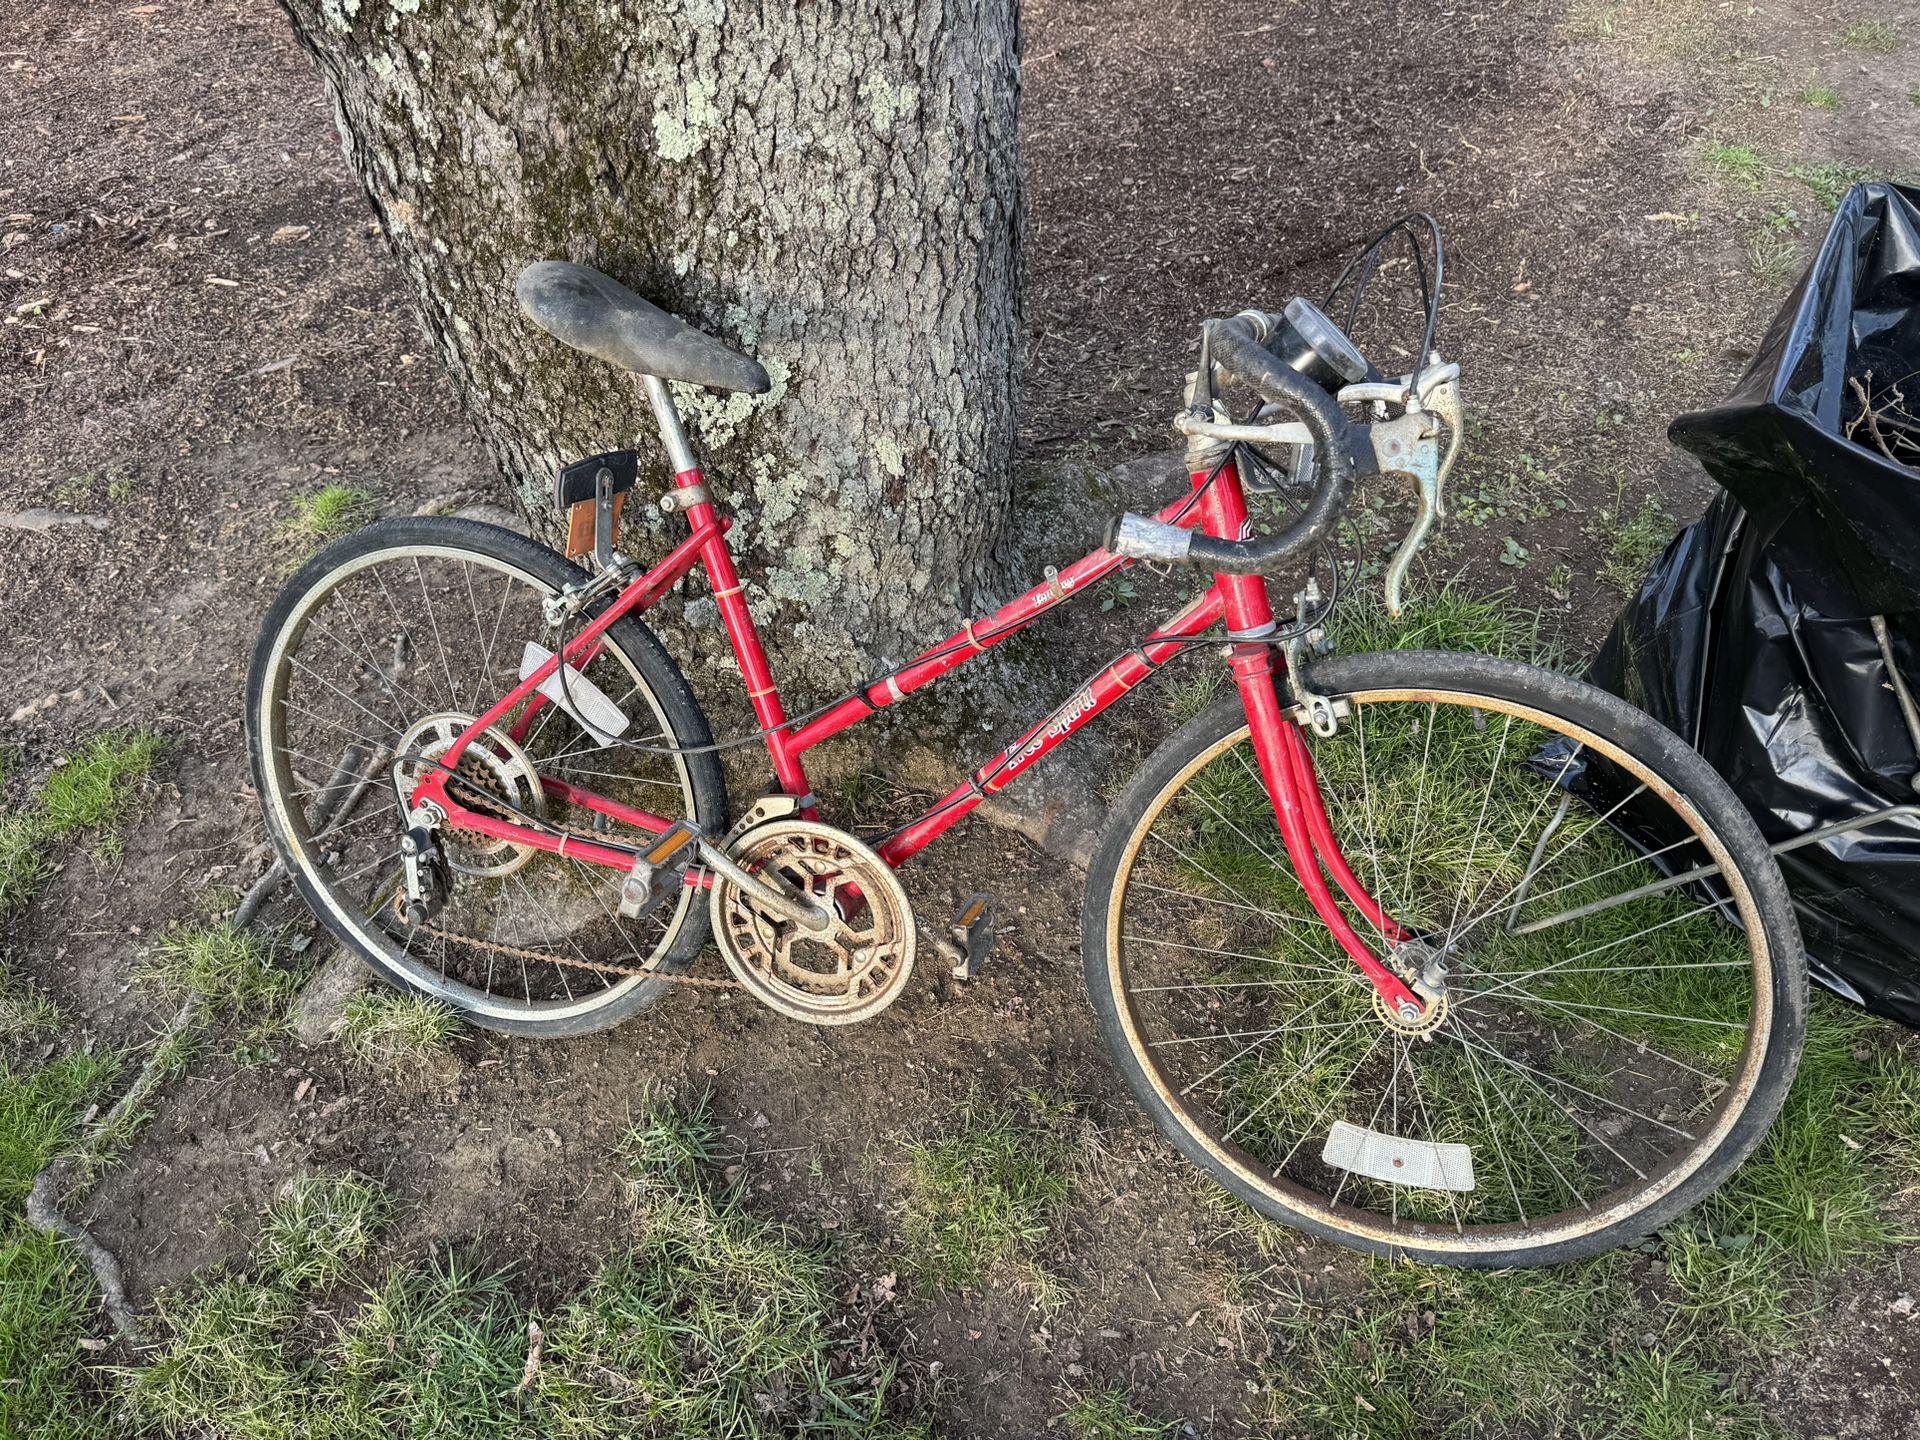 Vintage/Antique Bicycle